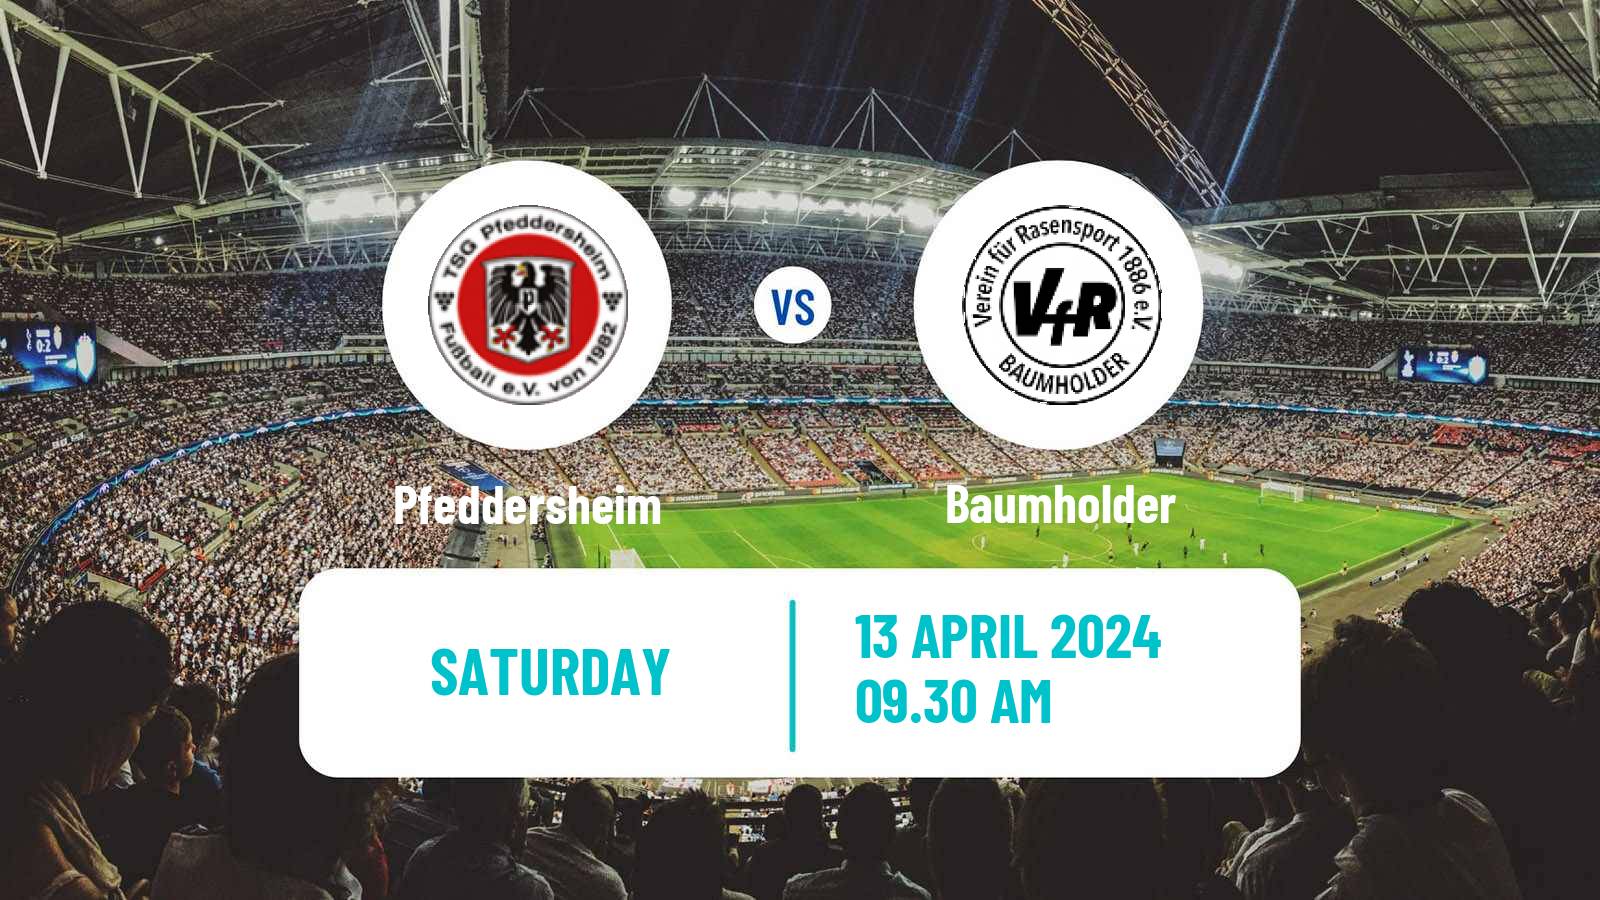 Soccer German Oberliga Rheinland-Pfalz/Saar Pfeddersheim - Baumholder